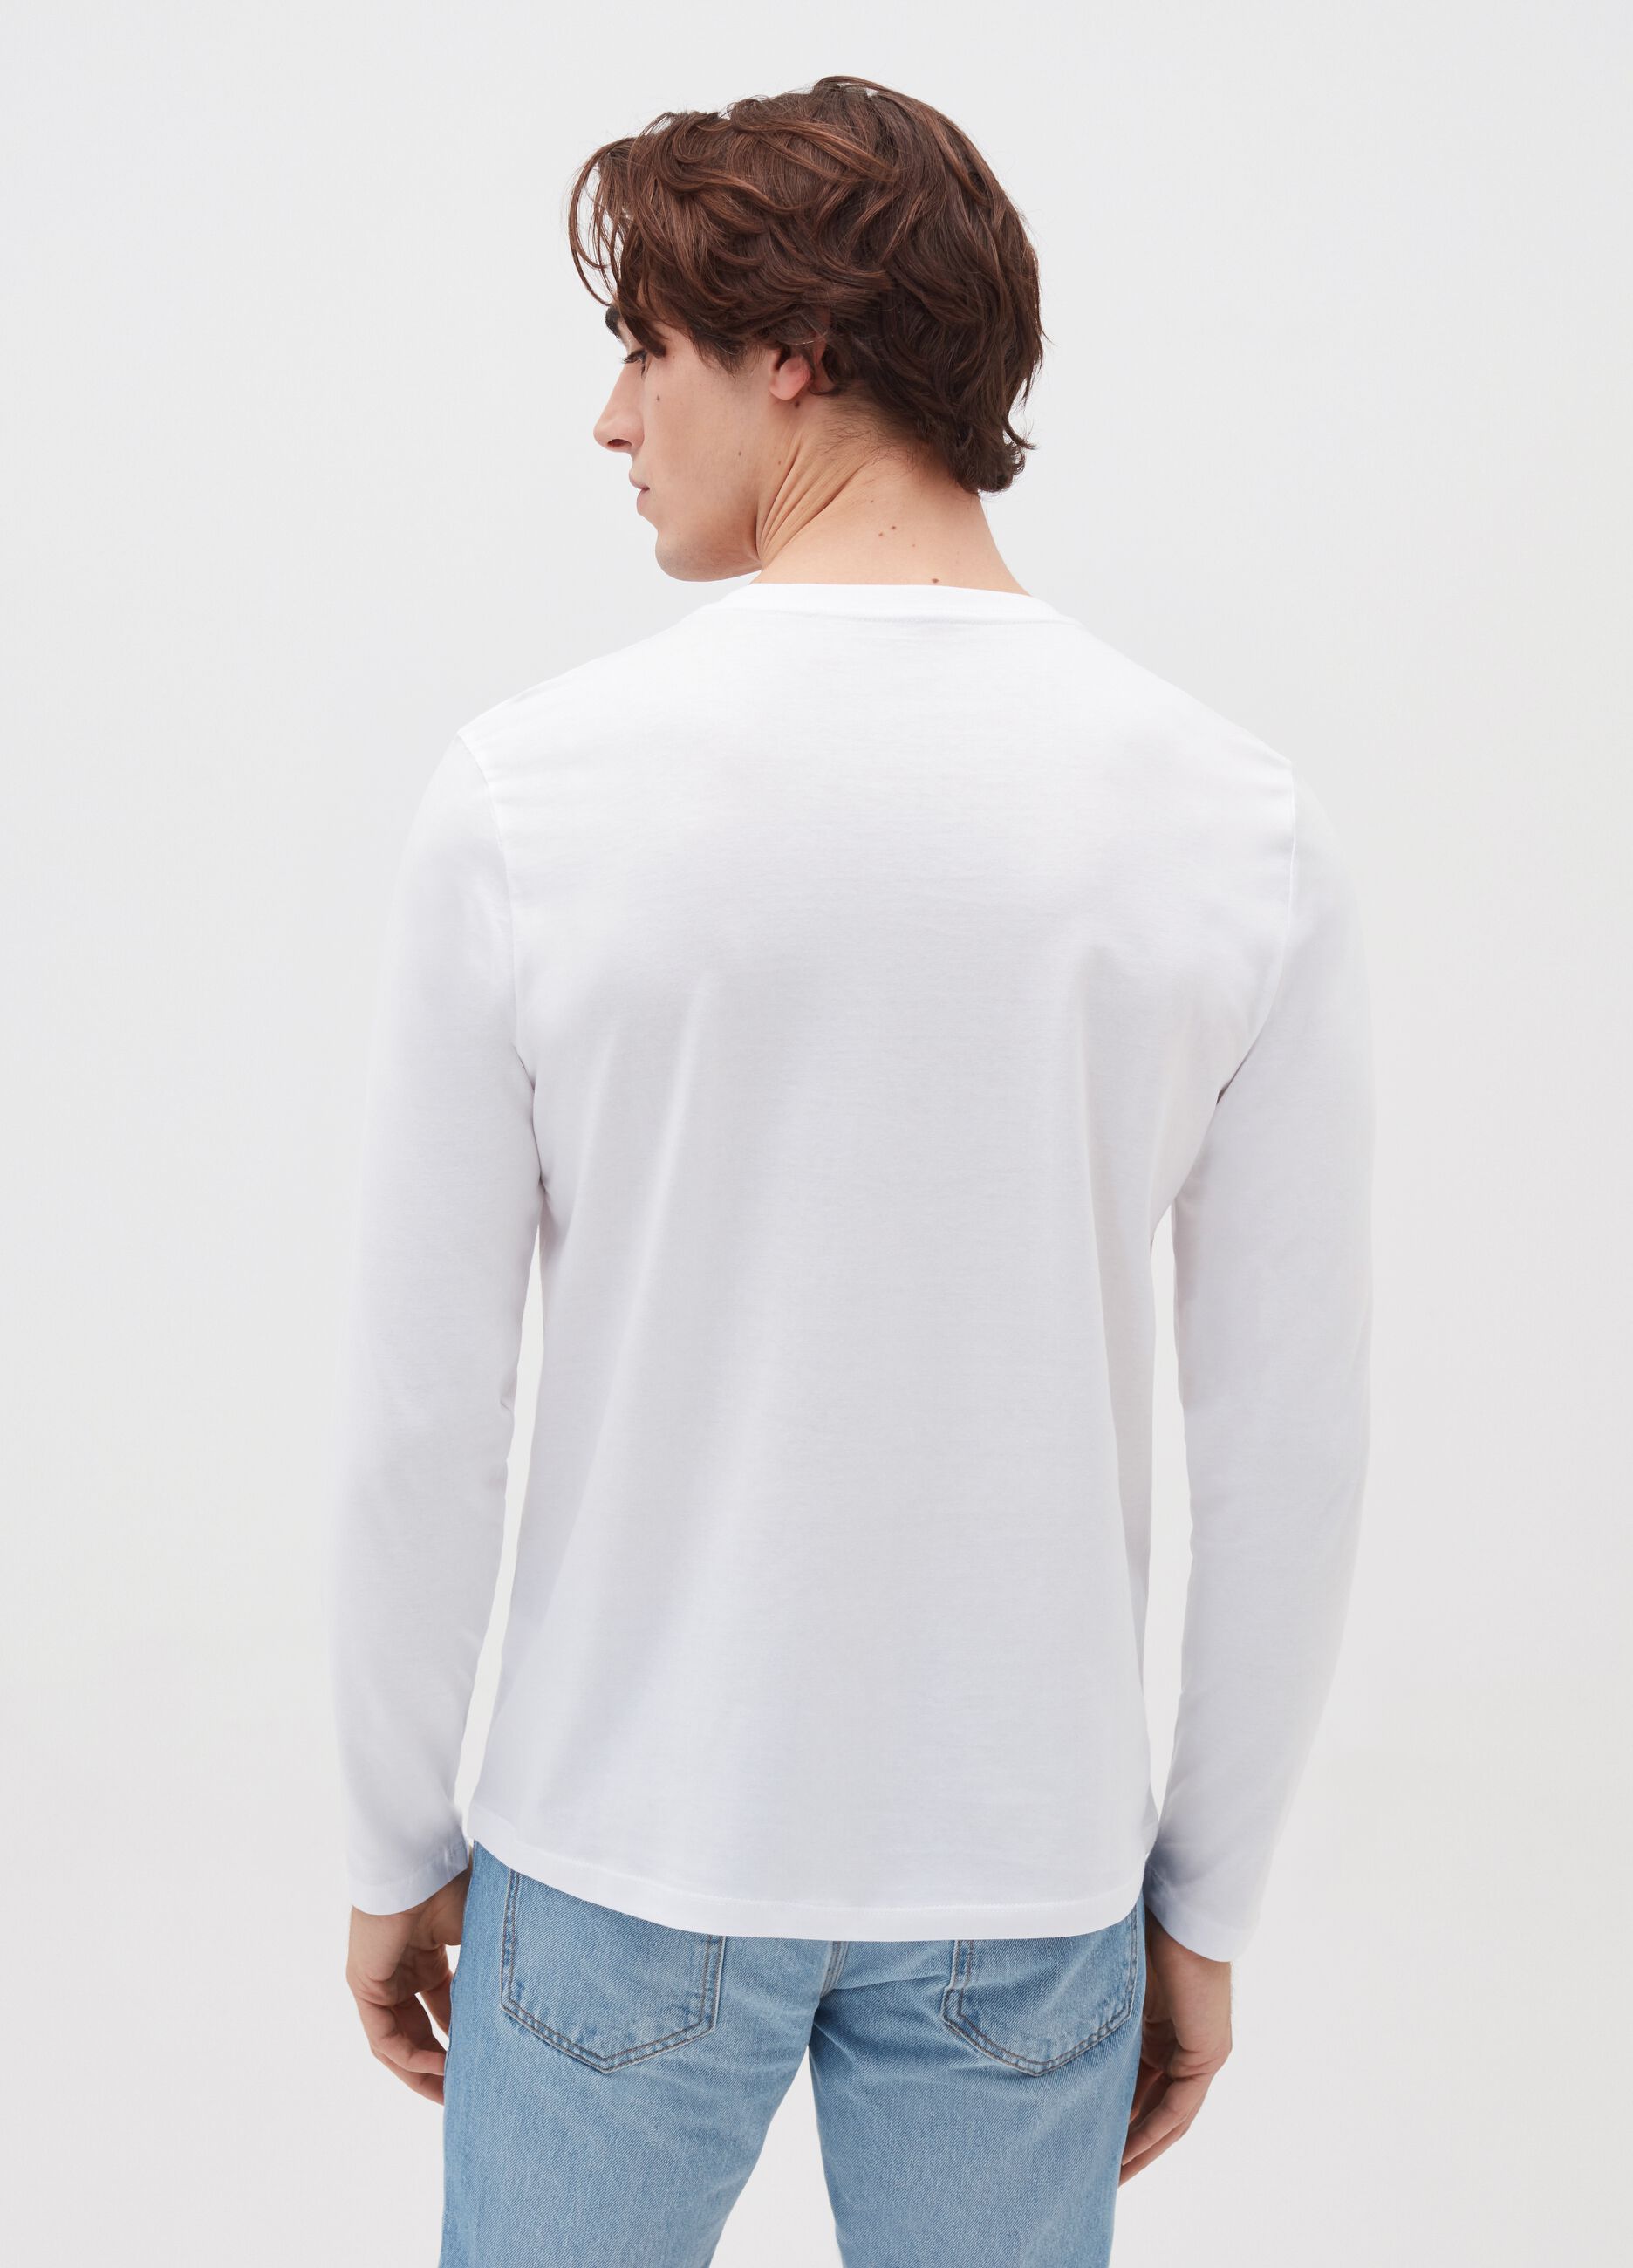 Camiseta algodón 100% manga larga